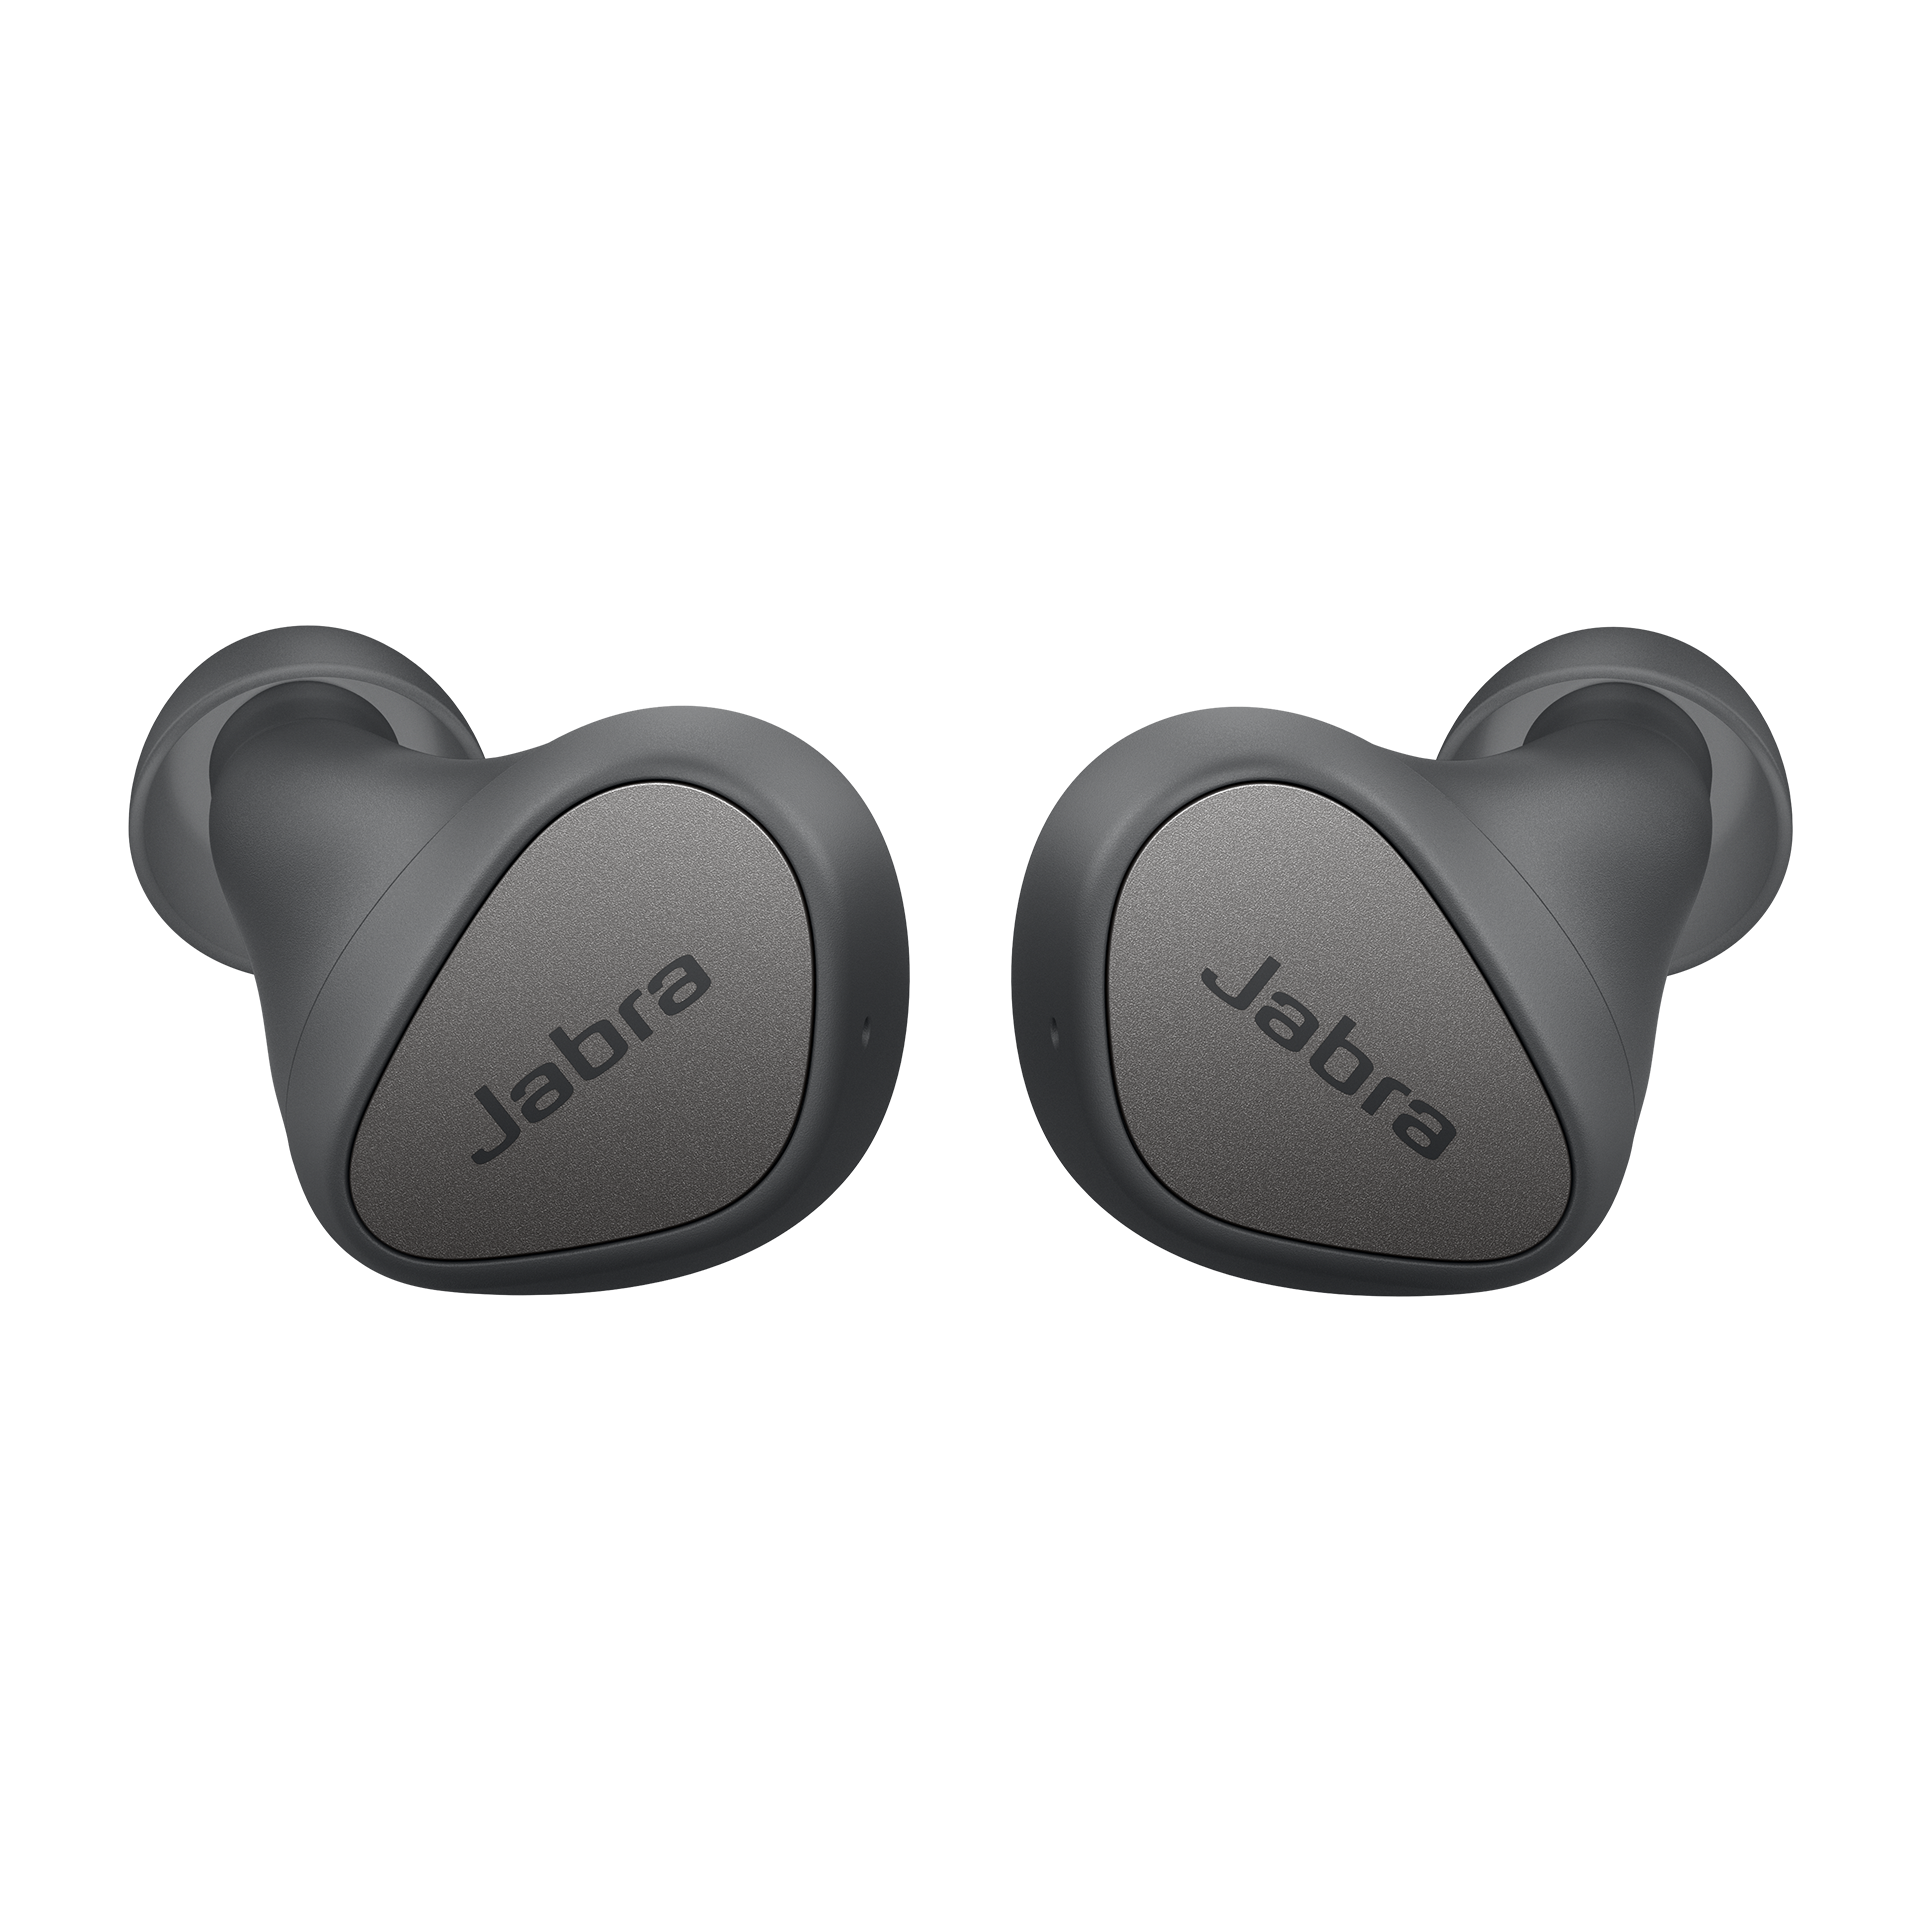 Jabra Elite 4 Earbuds Replacement Earbuds - Dark Grey